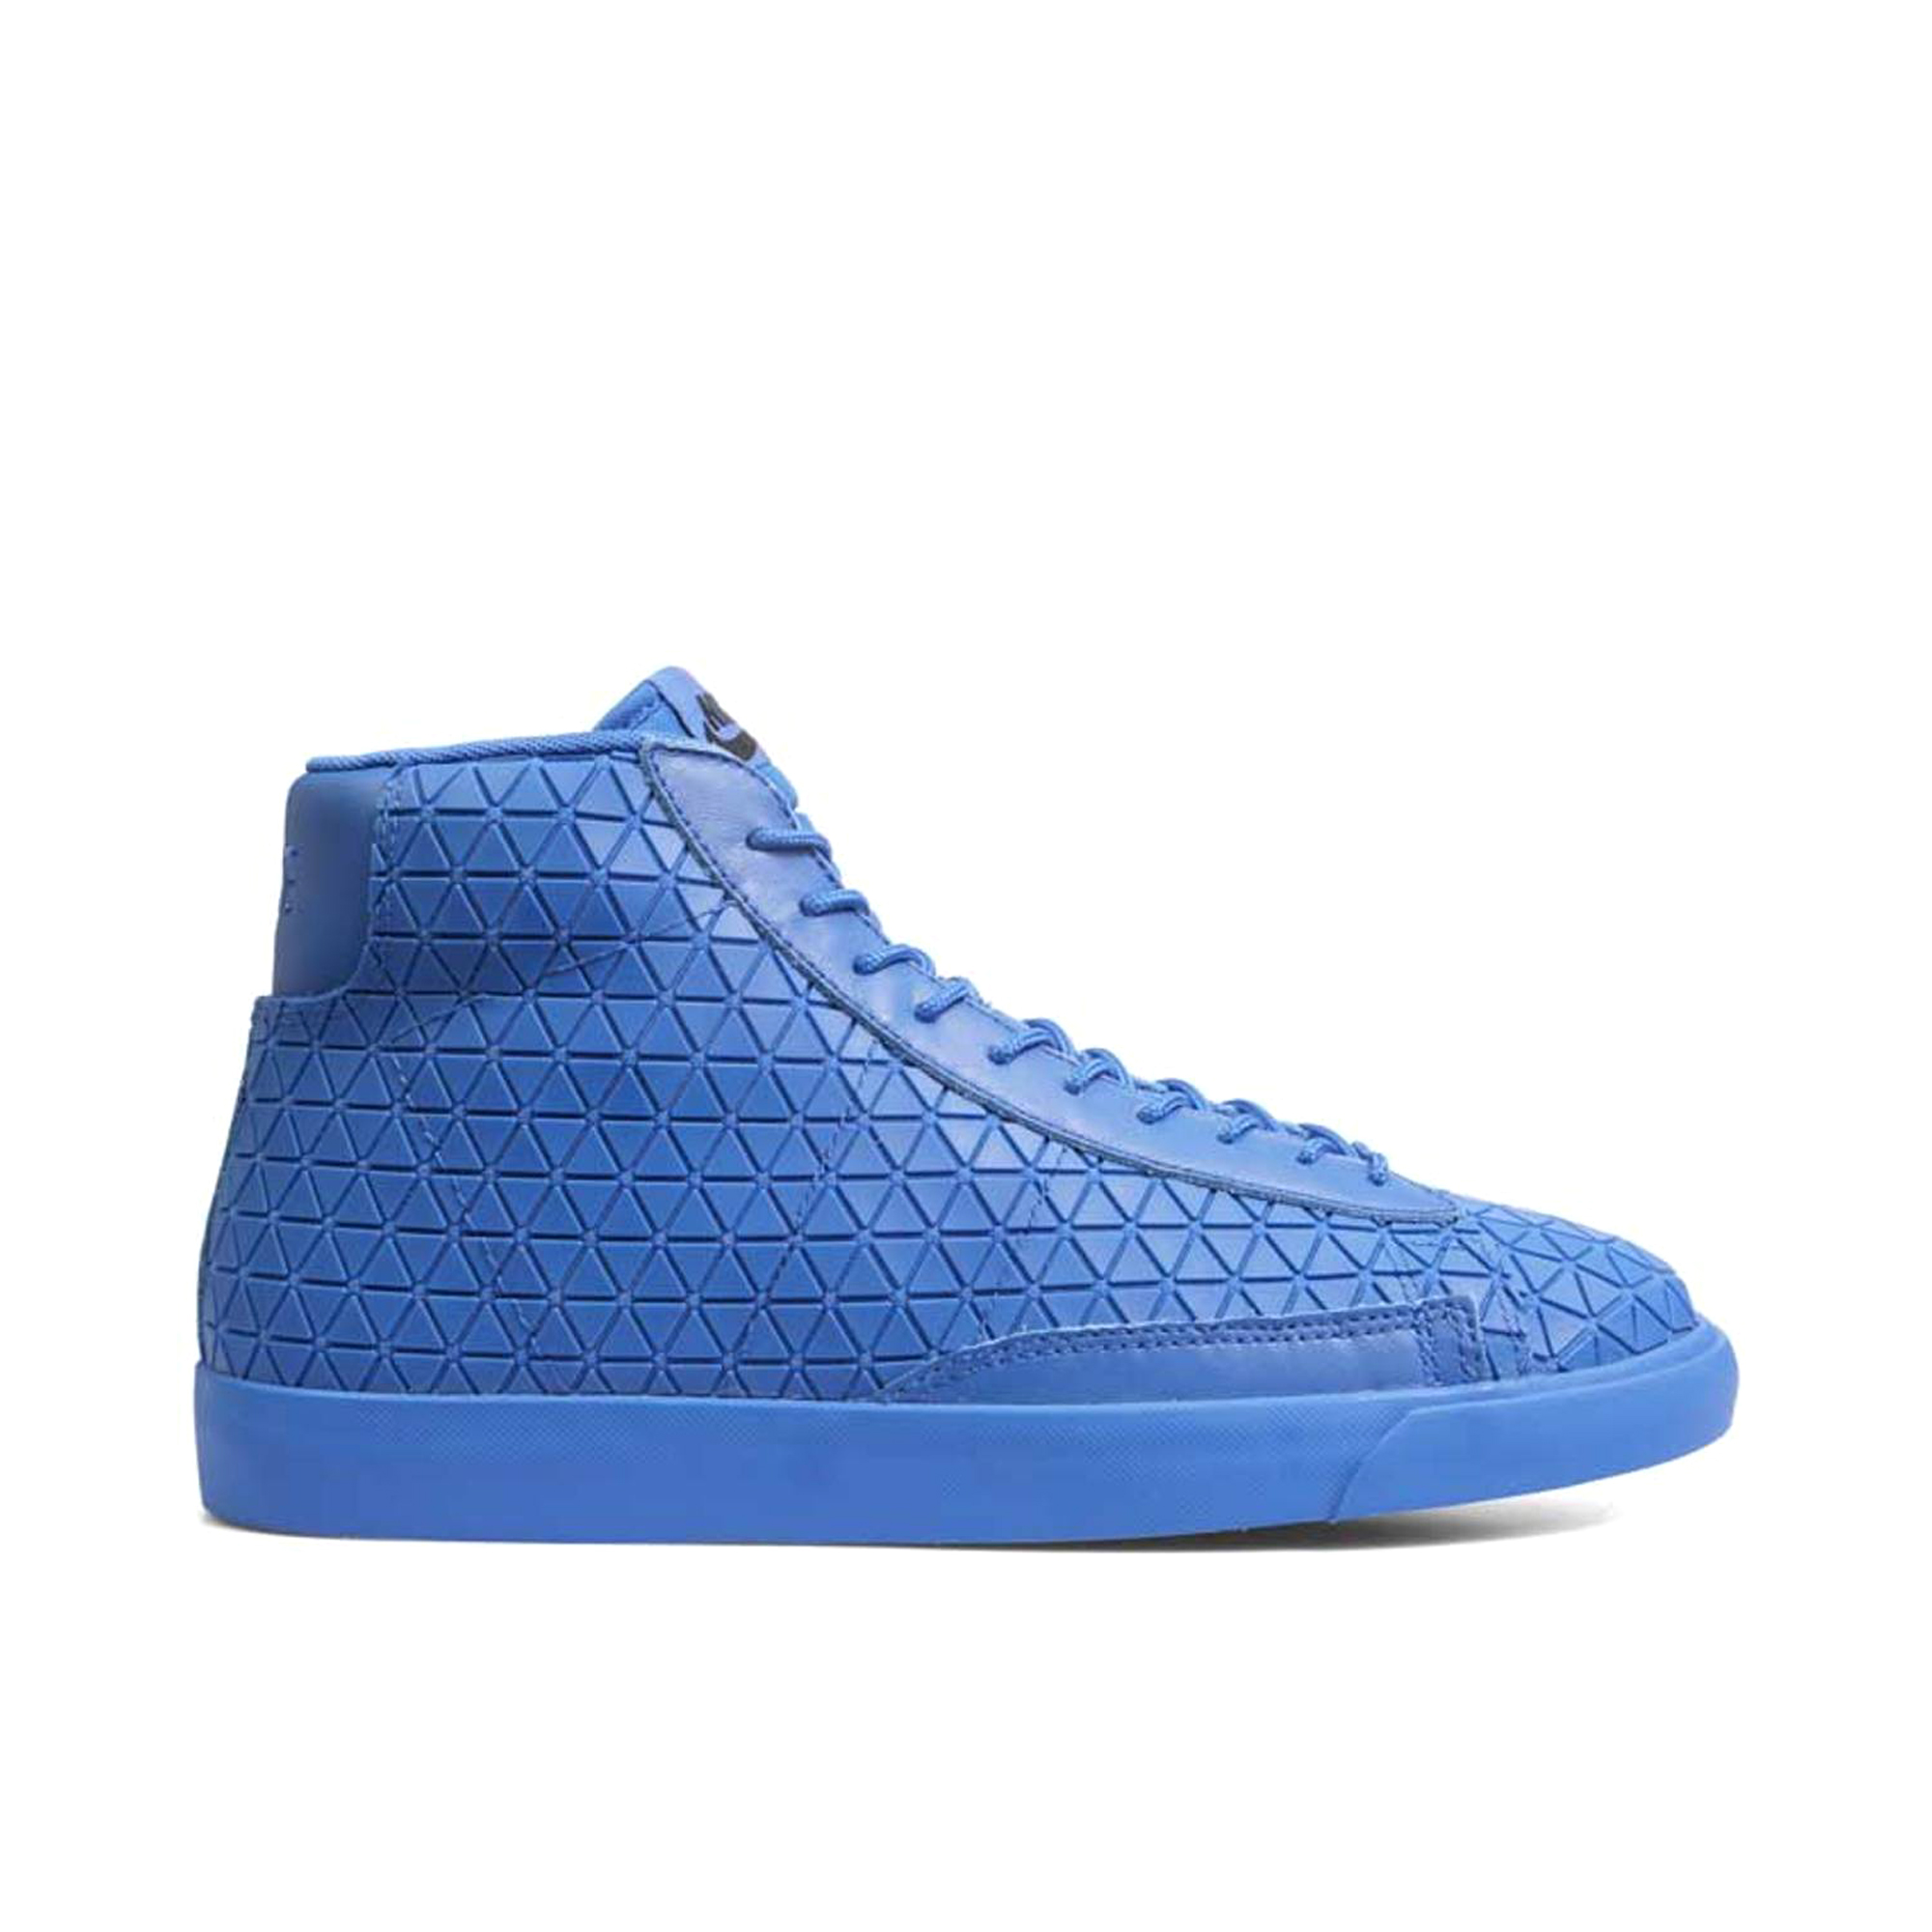 Cheap Ietp Jordan | jd nike air max kids clothes - 400 Nike SB Metric Blue | 744419